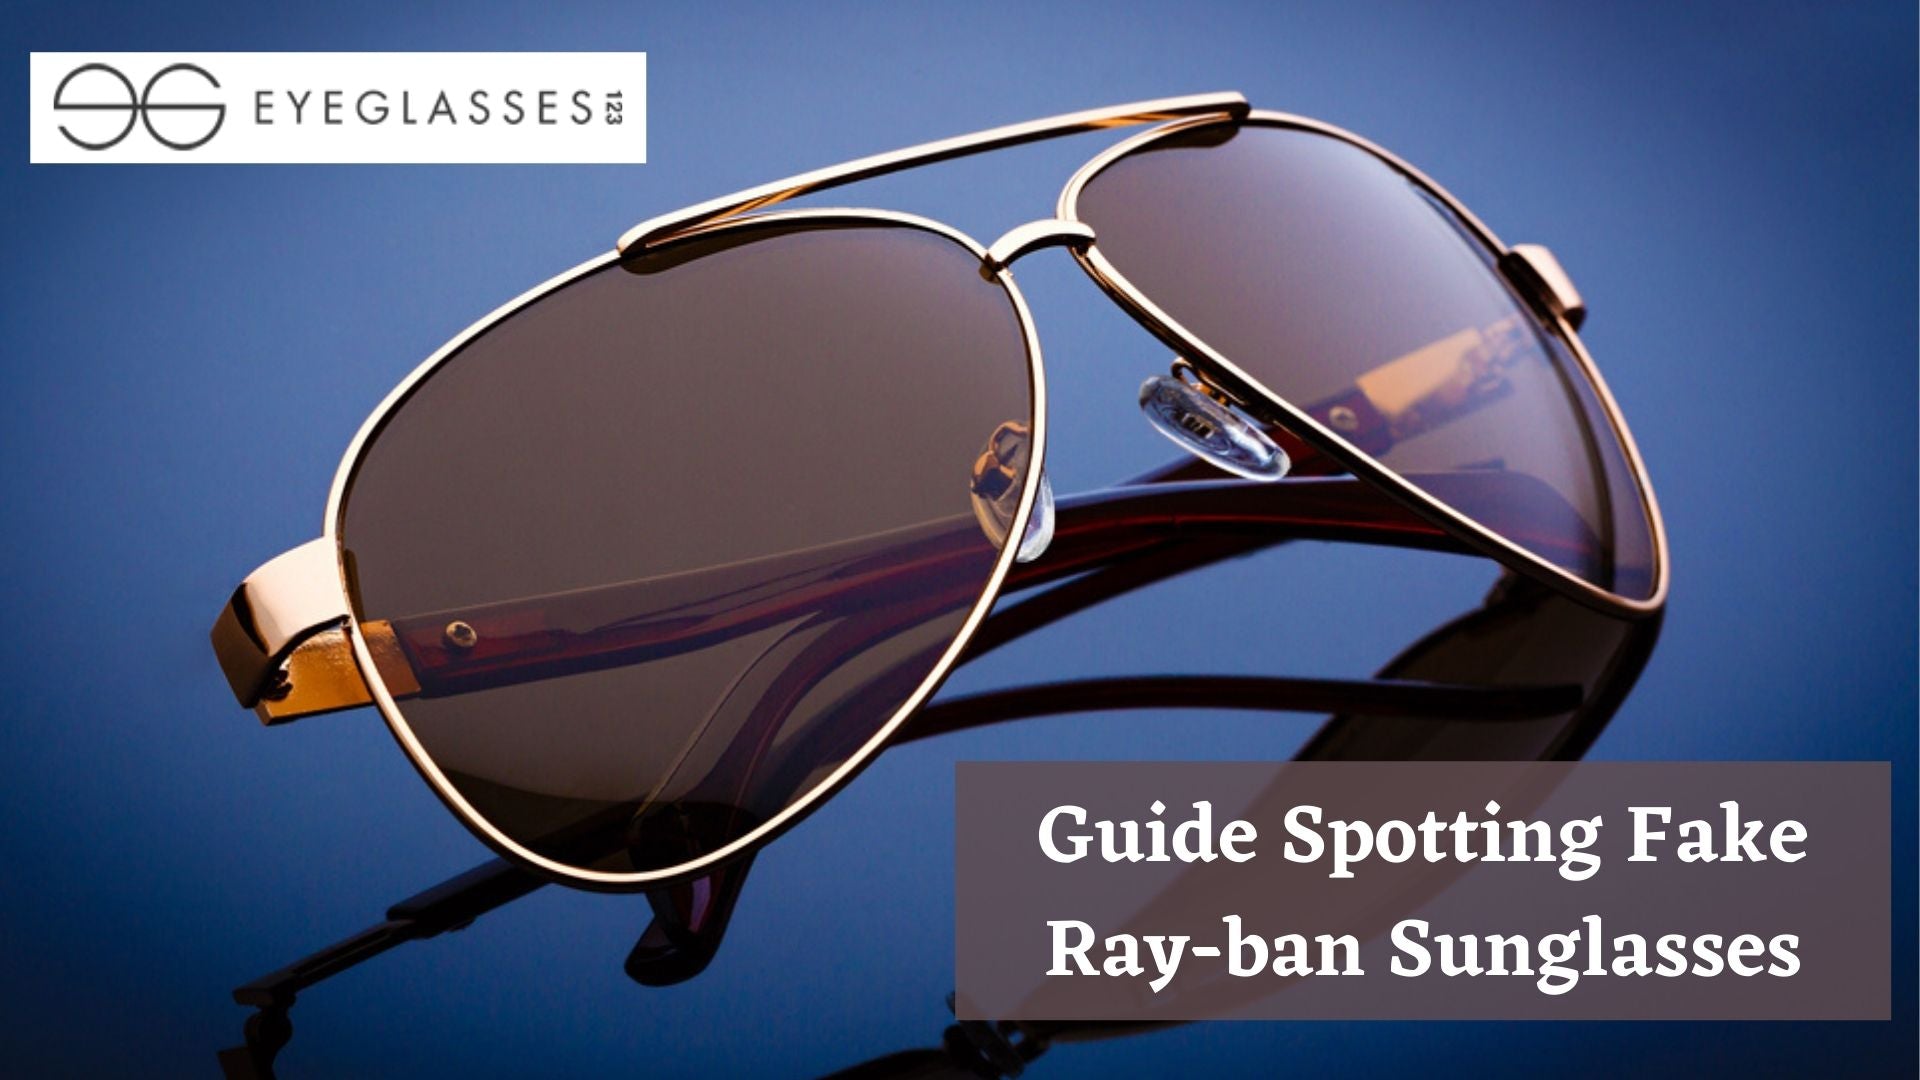 Guide Spotting Fake Ray-ban Sunglasses